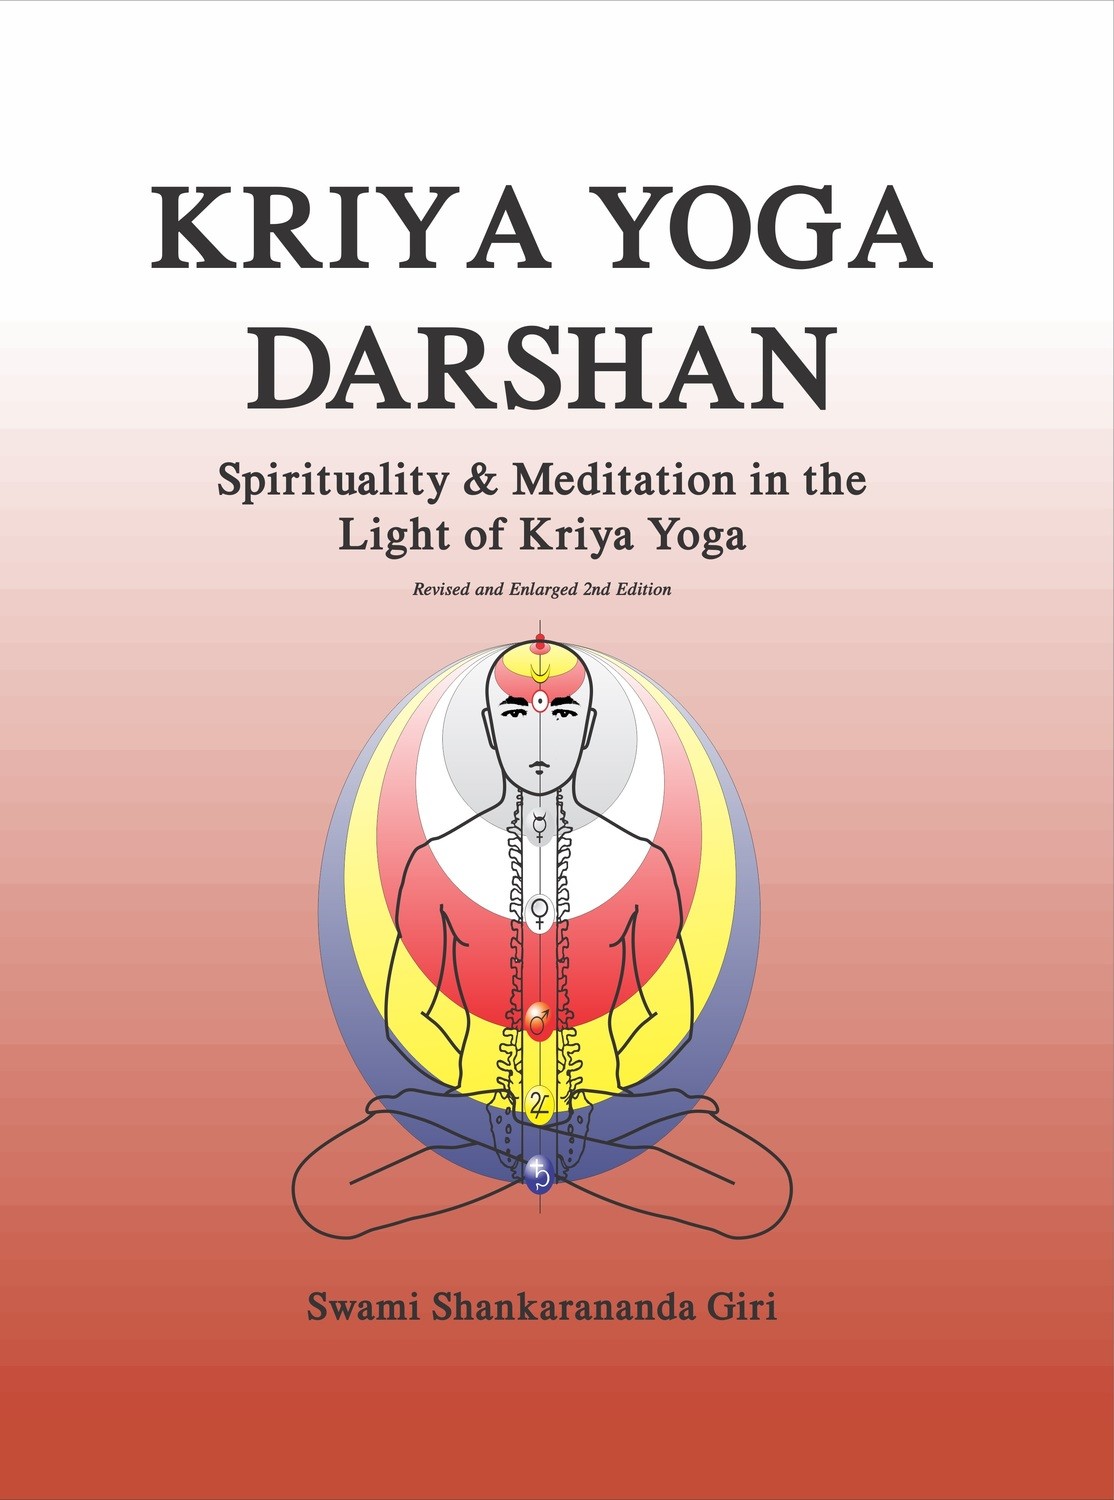 Kriya Yoga Darshan: Spirituality and Meditation in the Light of Kriya Yoga